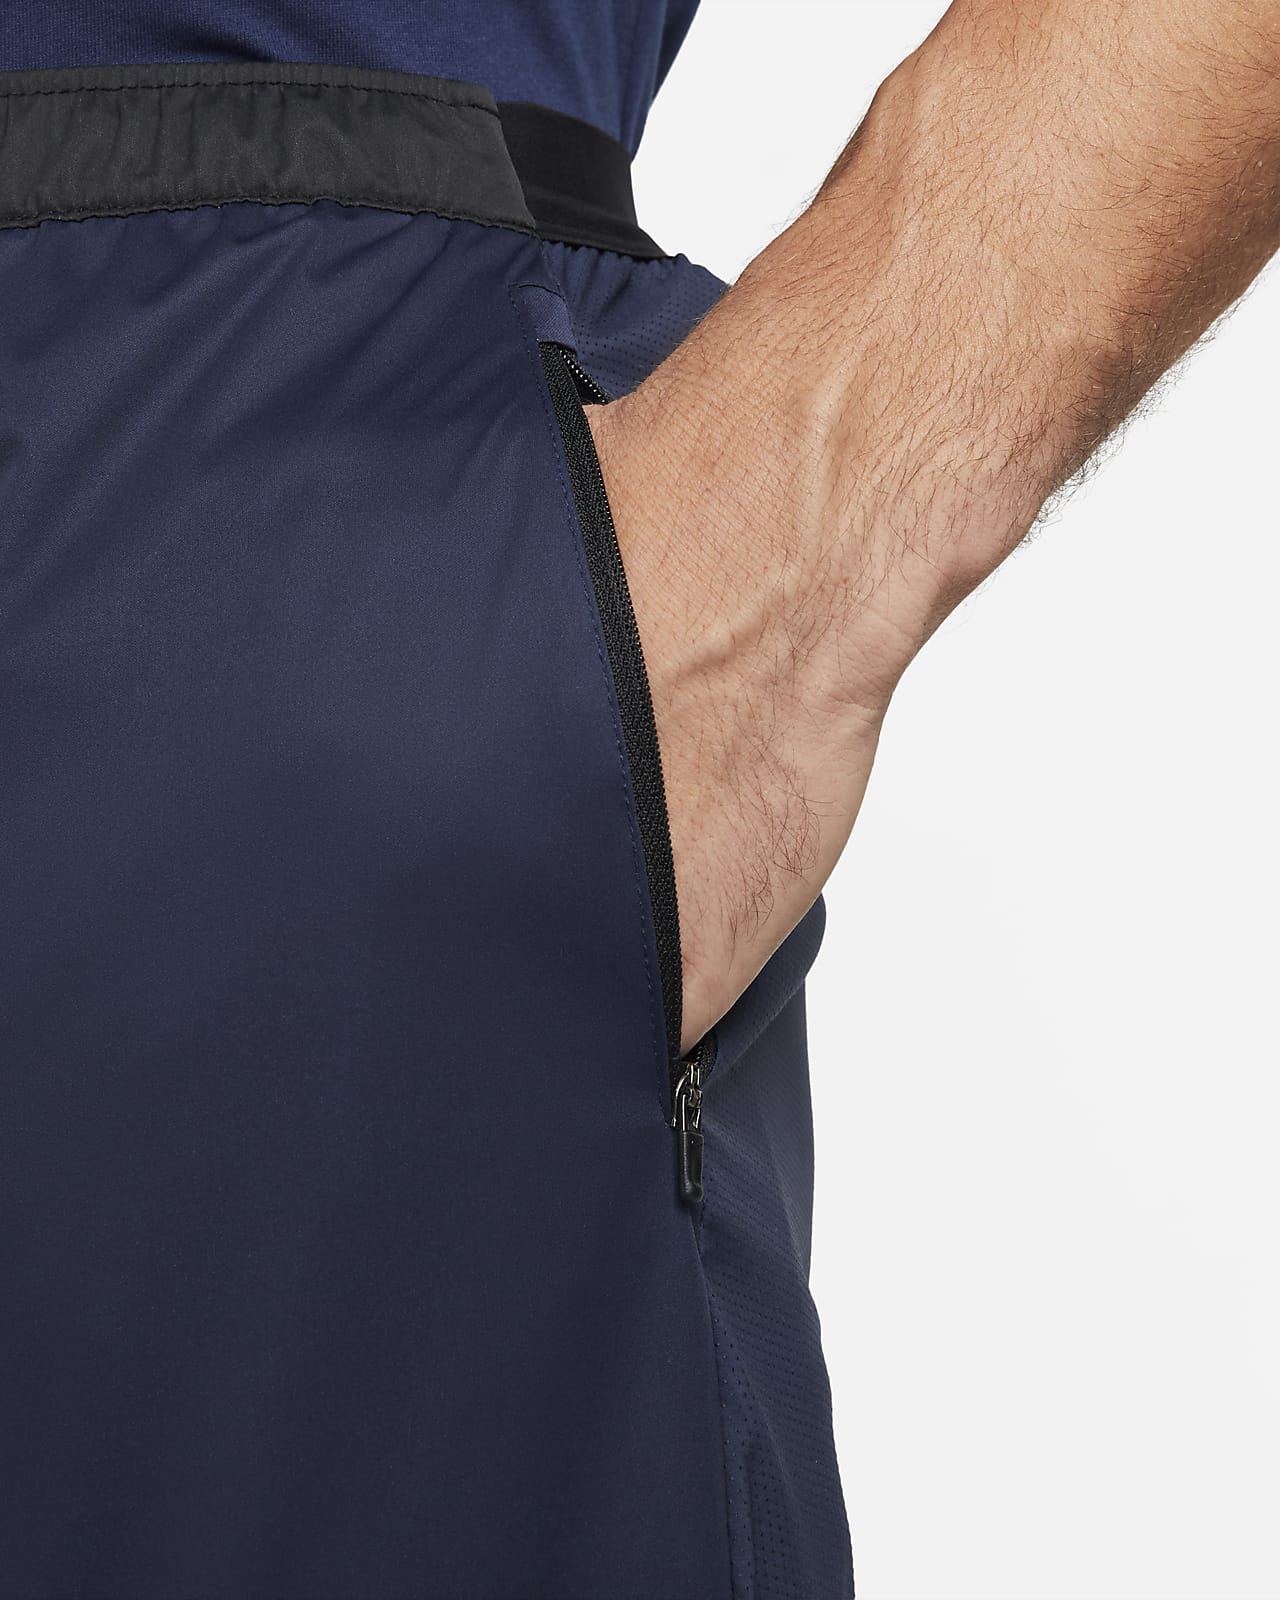 Nike Men's Dri-FIT Phenom Elite Knit Trail Running Pants in Grey - ShopStyle